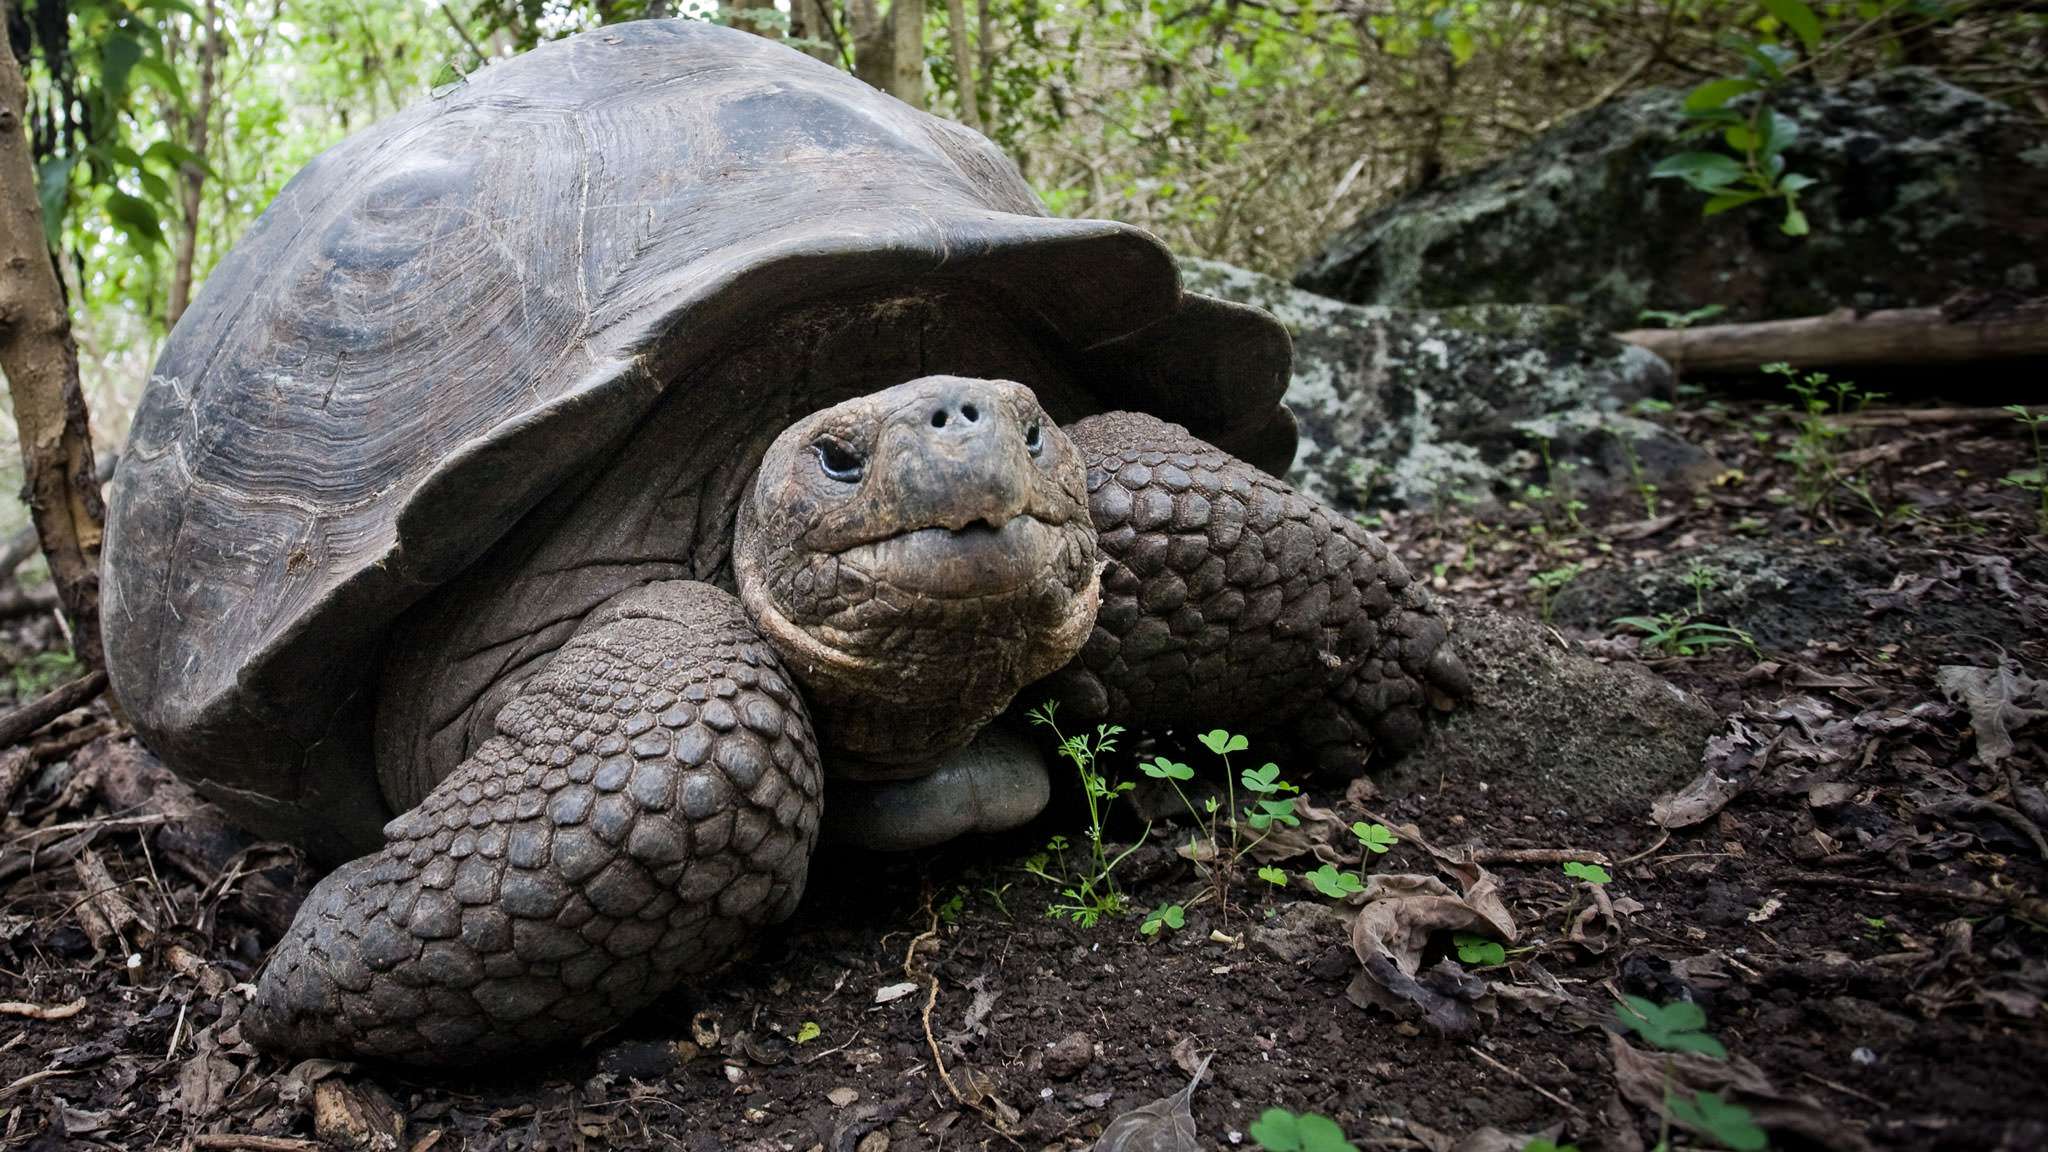 Galapagos Tortoise Habitat, Diet & Reproduction